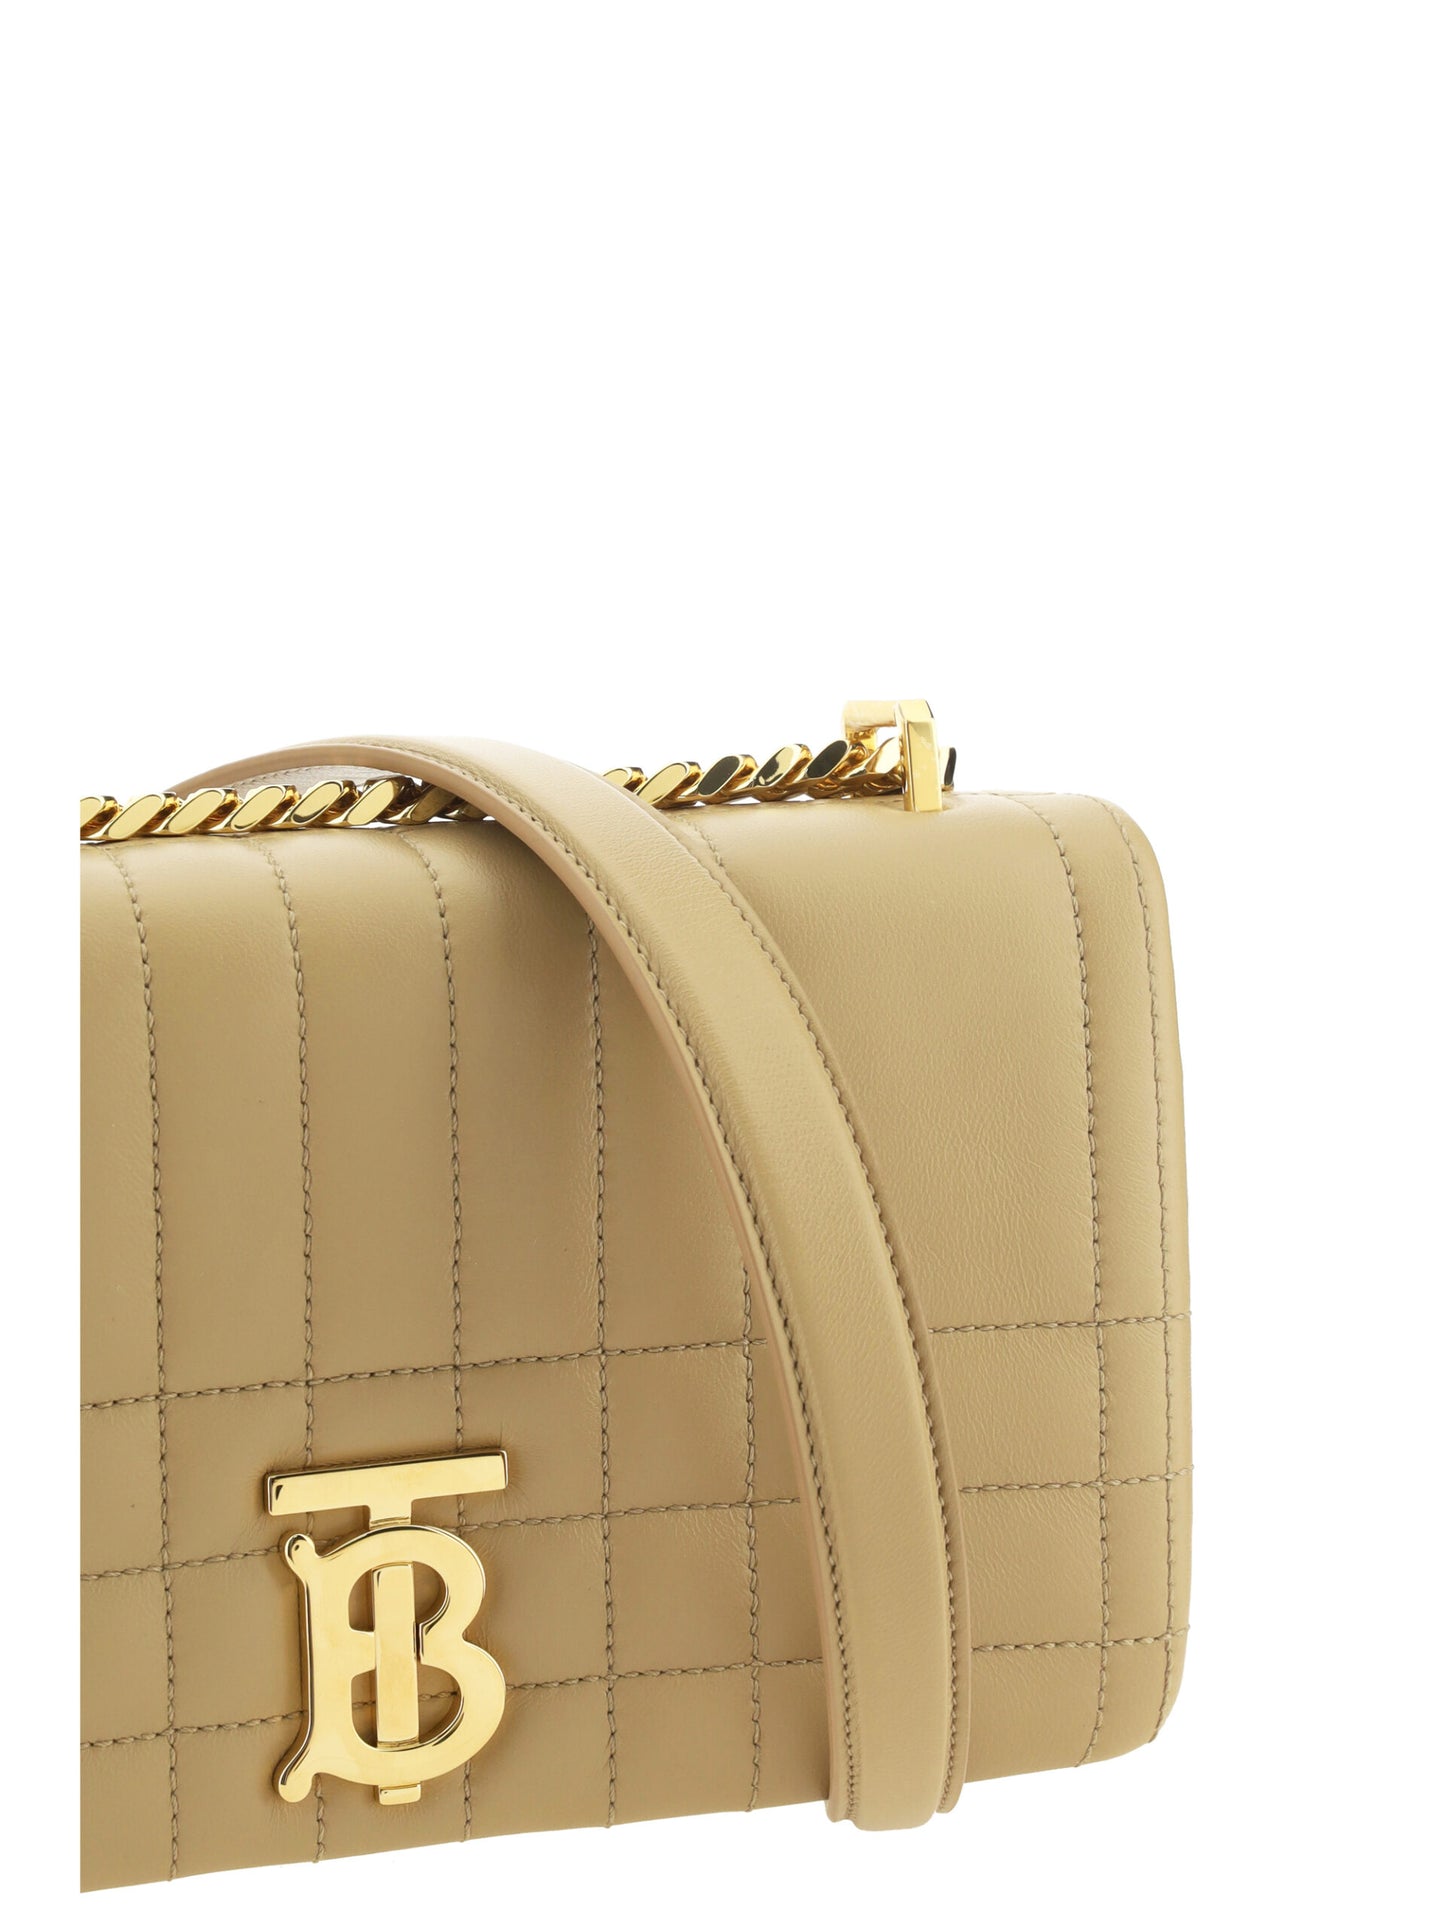 Burberry Women's Oat Beige Leather Lola Shoulder Bag